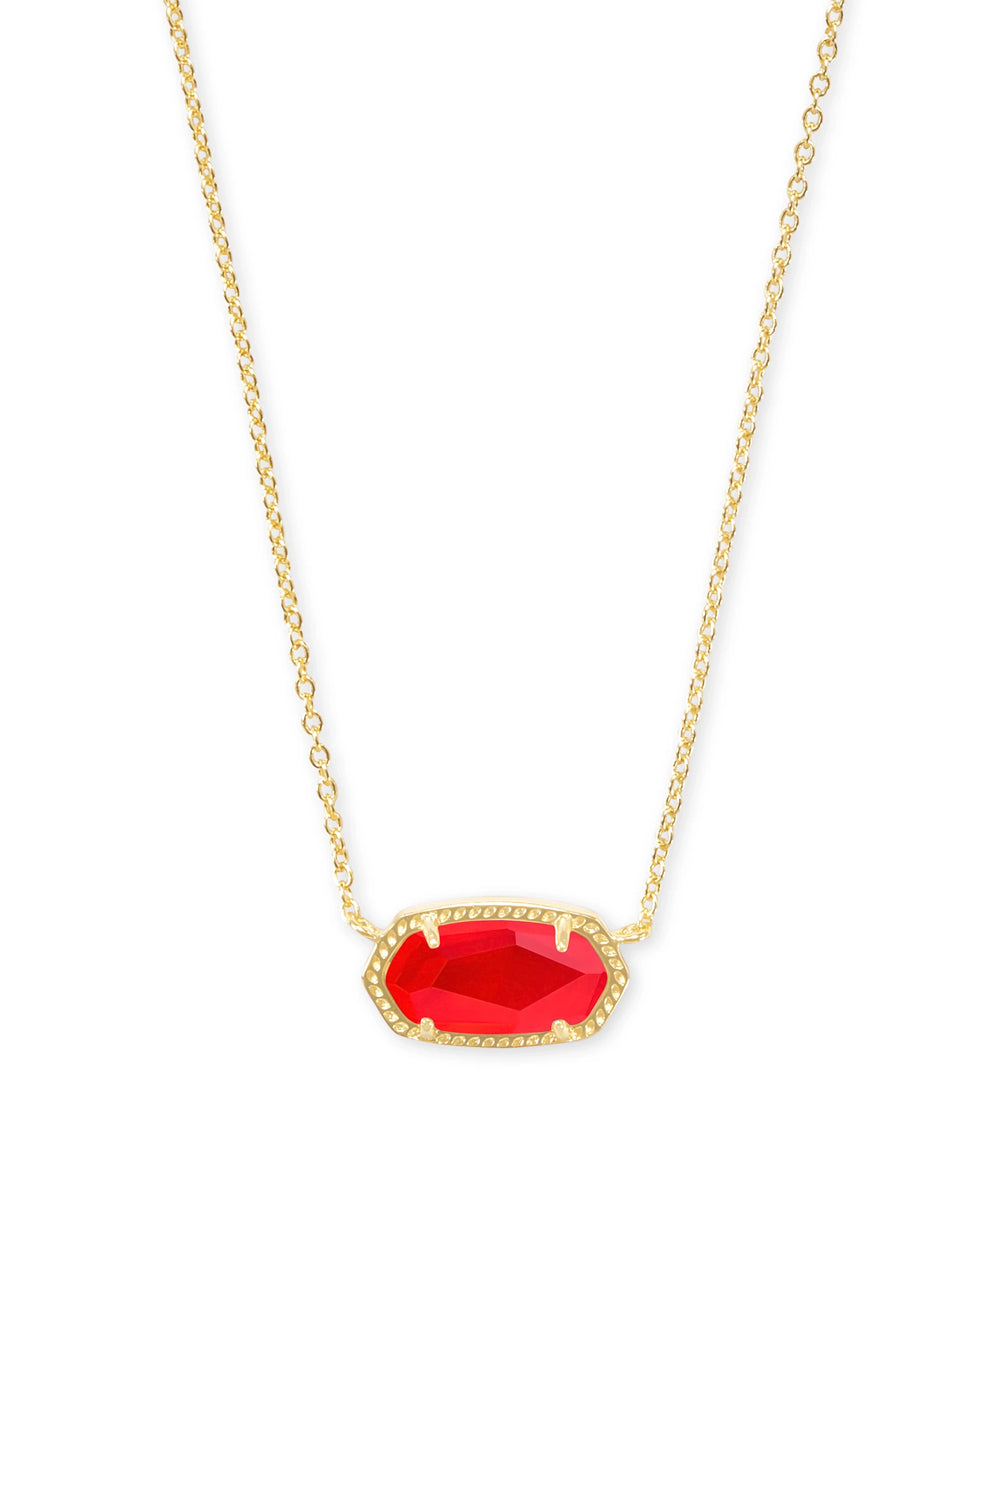 Kendra Scott: Elisa Gold Short Pendant Necklace - Red Illusion | Makk Fashions